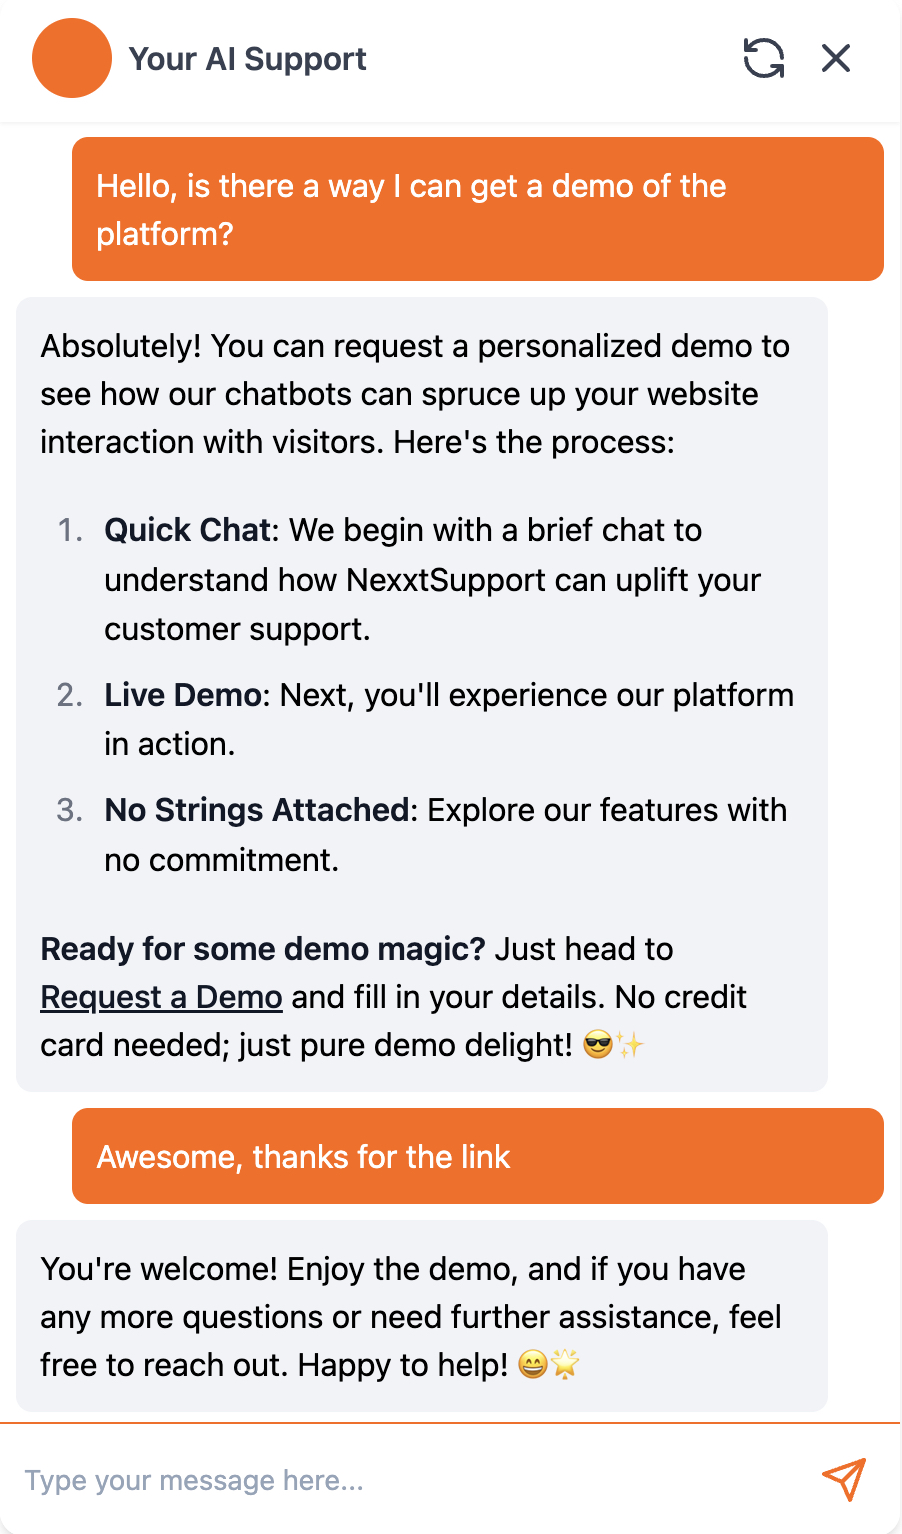 Customer support AI conversation demo